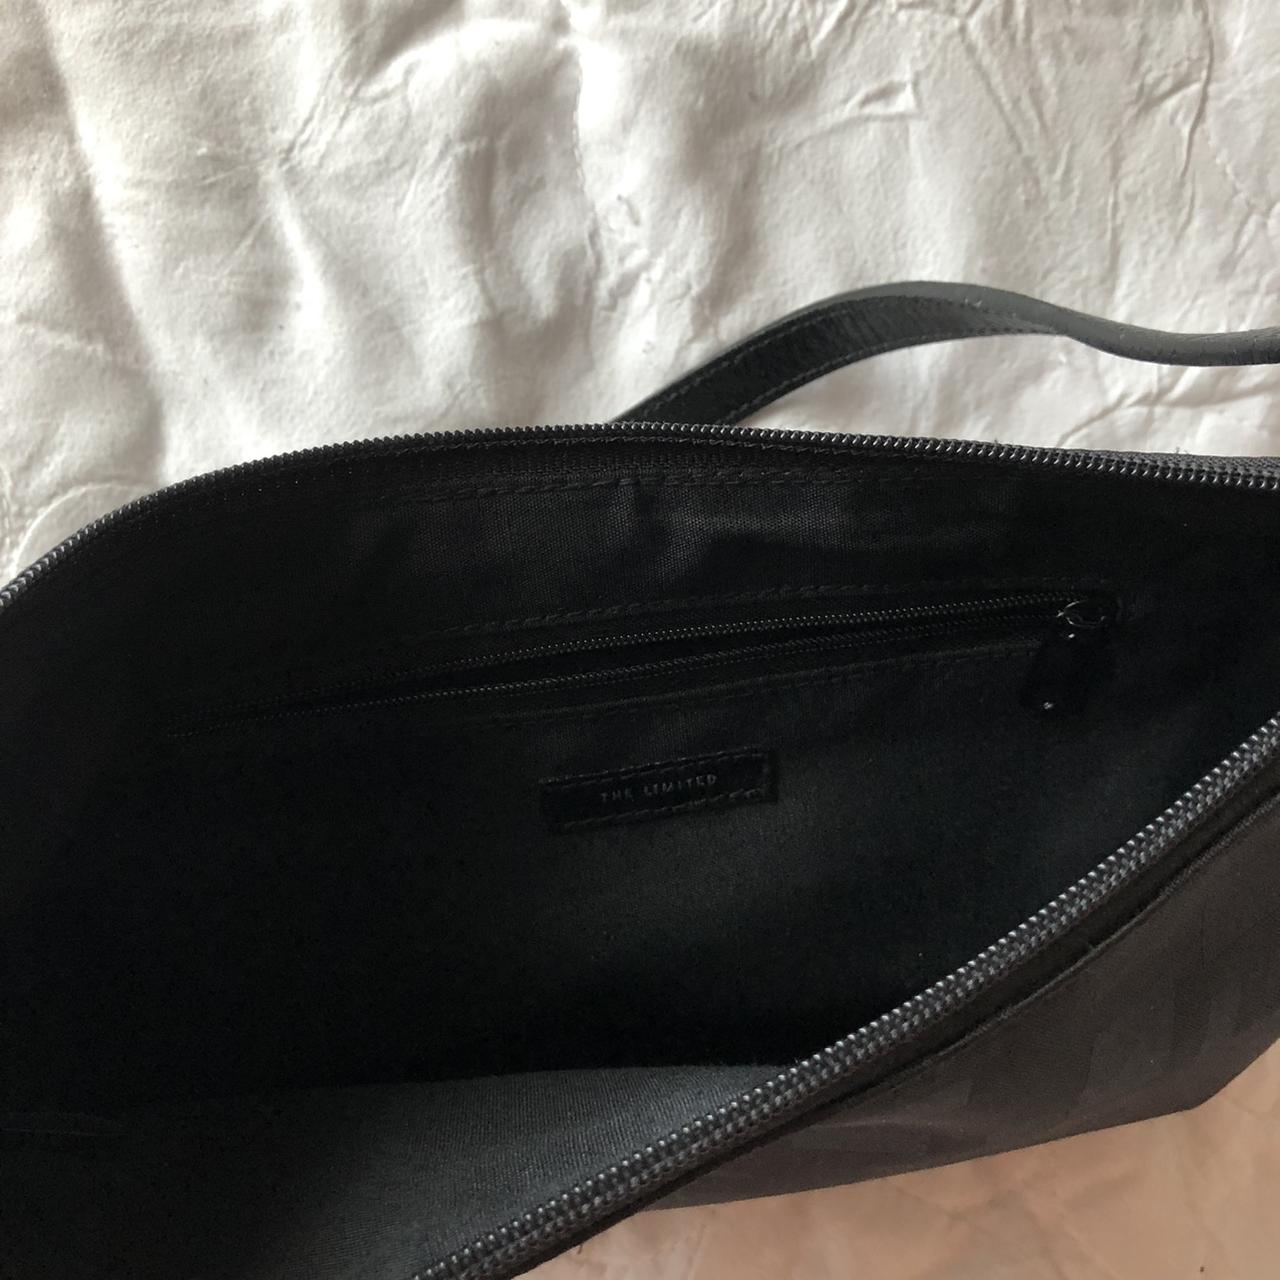 SOFT BLACK UNDERARM BAG 🖤 BRAND: The Limited Size:... - Depop